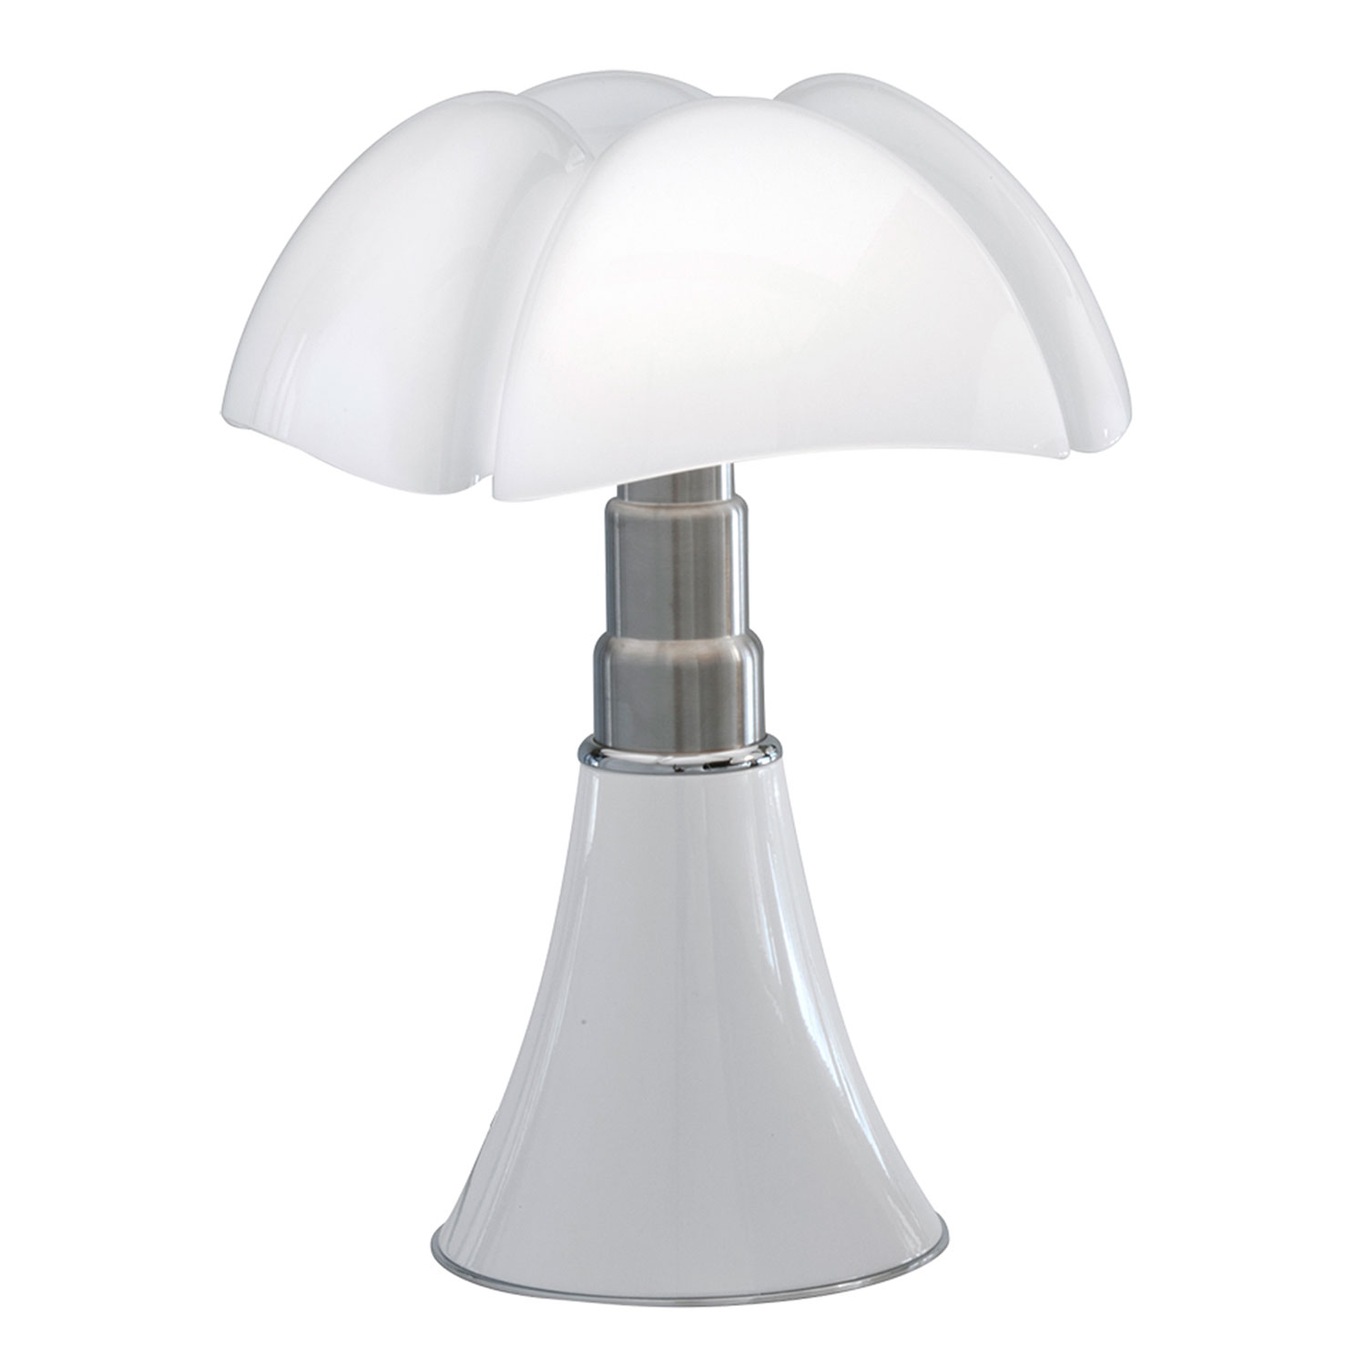 Pipistrello Mini Table Lamp Portable, White